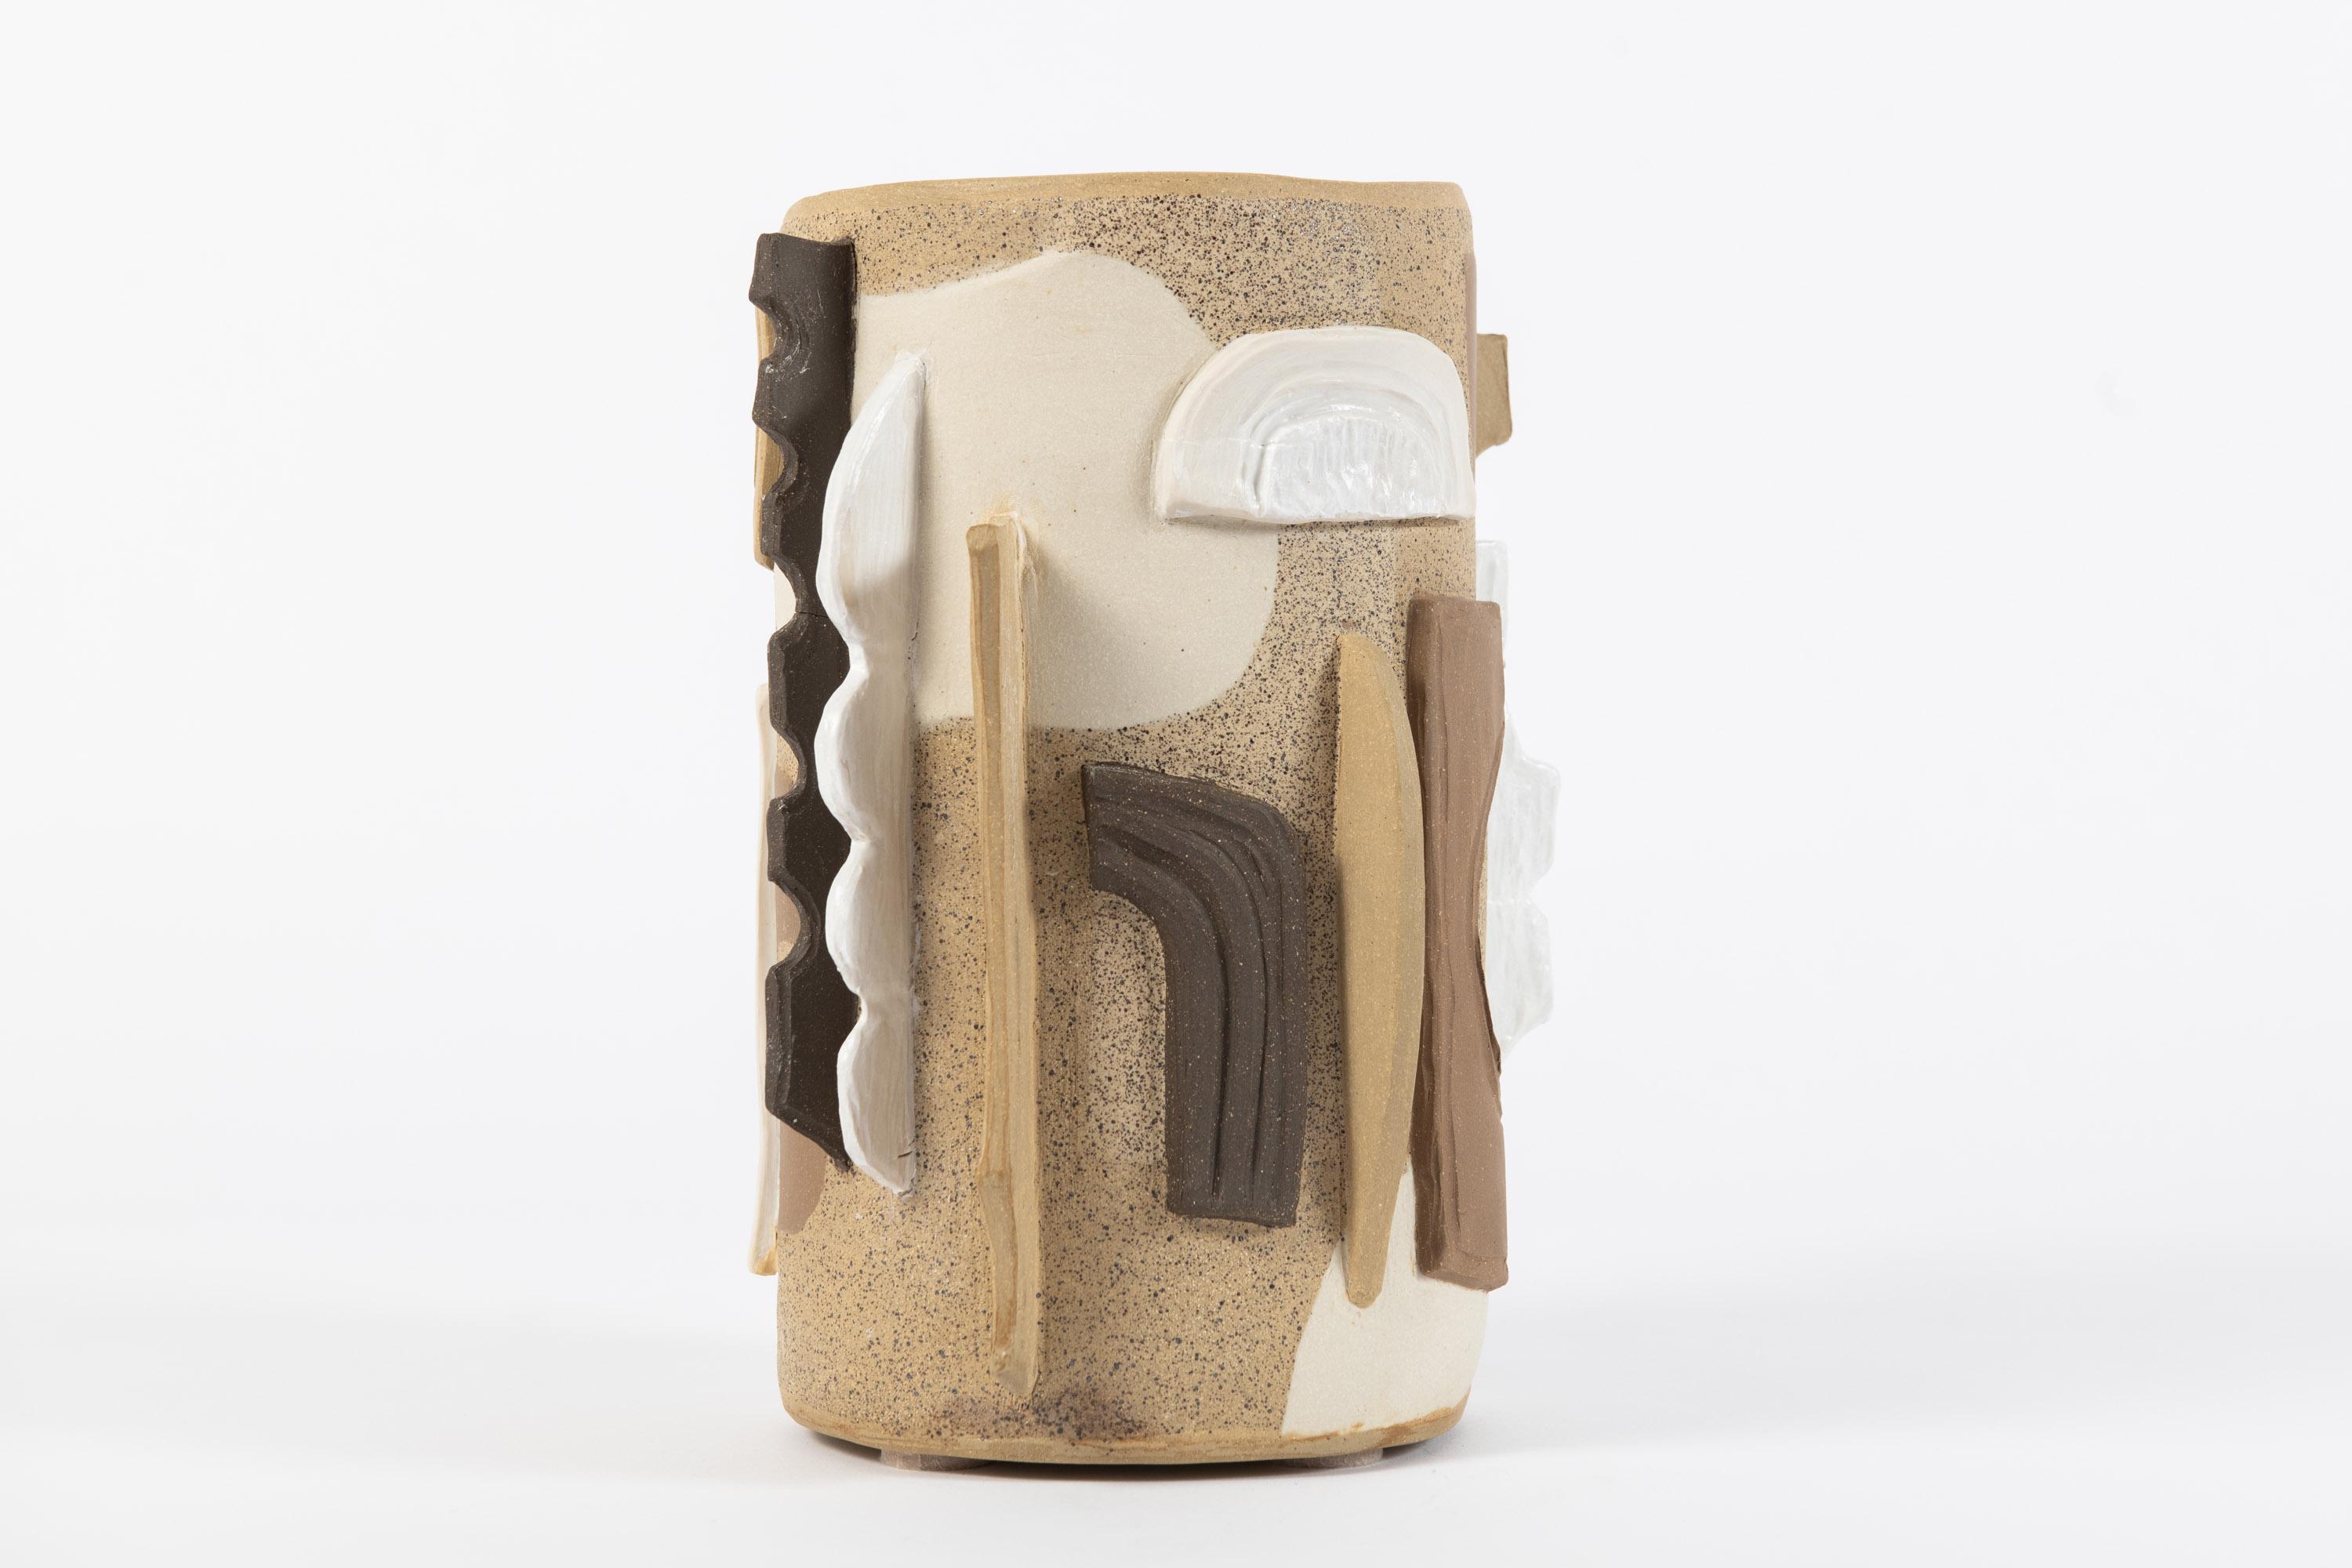 Trish DeMasi
Moderno Vessel, Lina, 2021
Inlaid clay bodies
Measures: 7.5 x 7.5 x 11 in

Named after Lina Bo Bardi, Italian-born modernist Brazilian architect and designer.